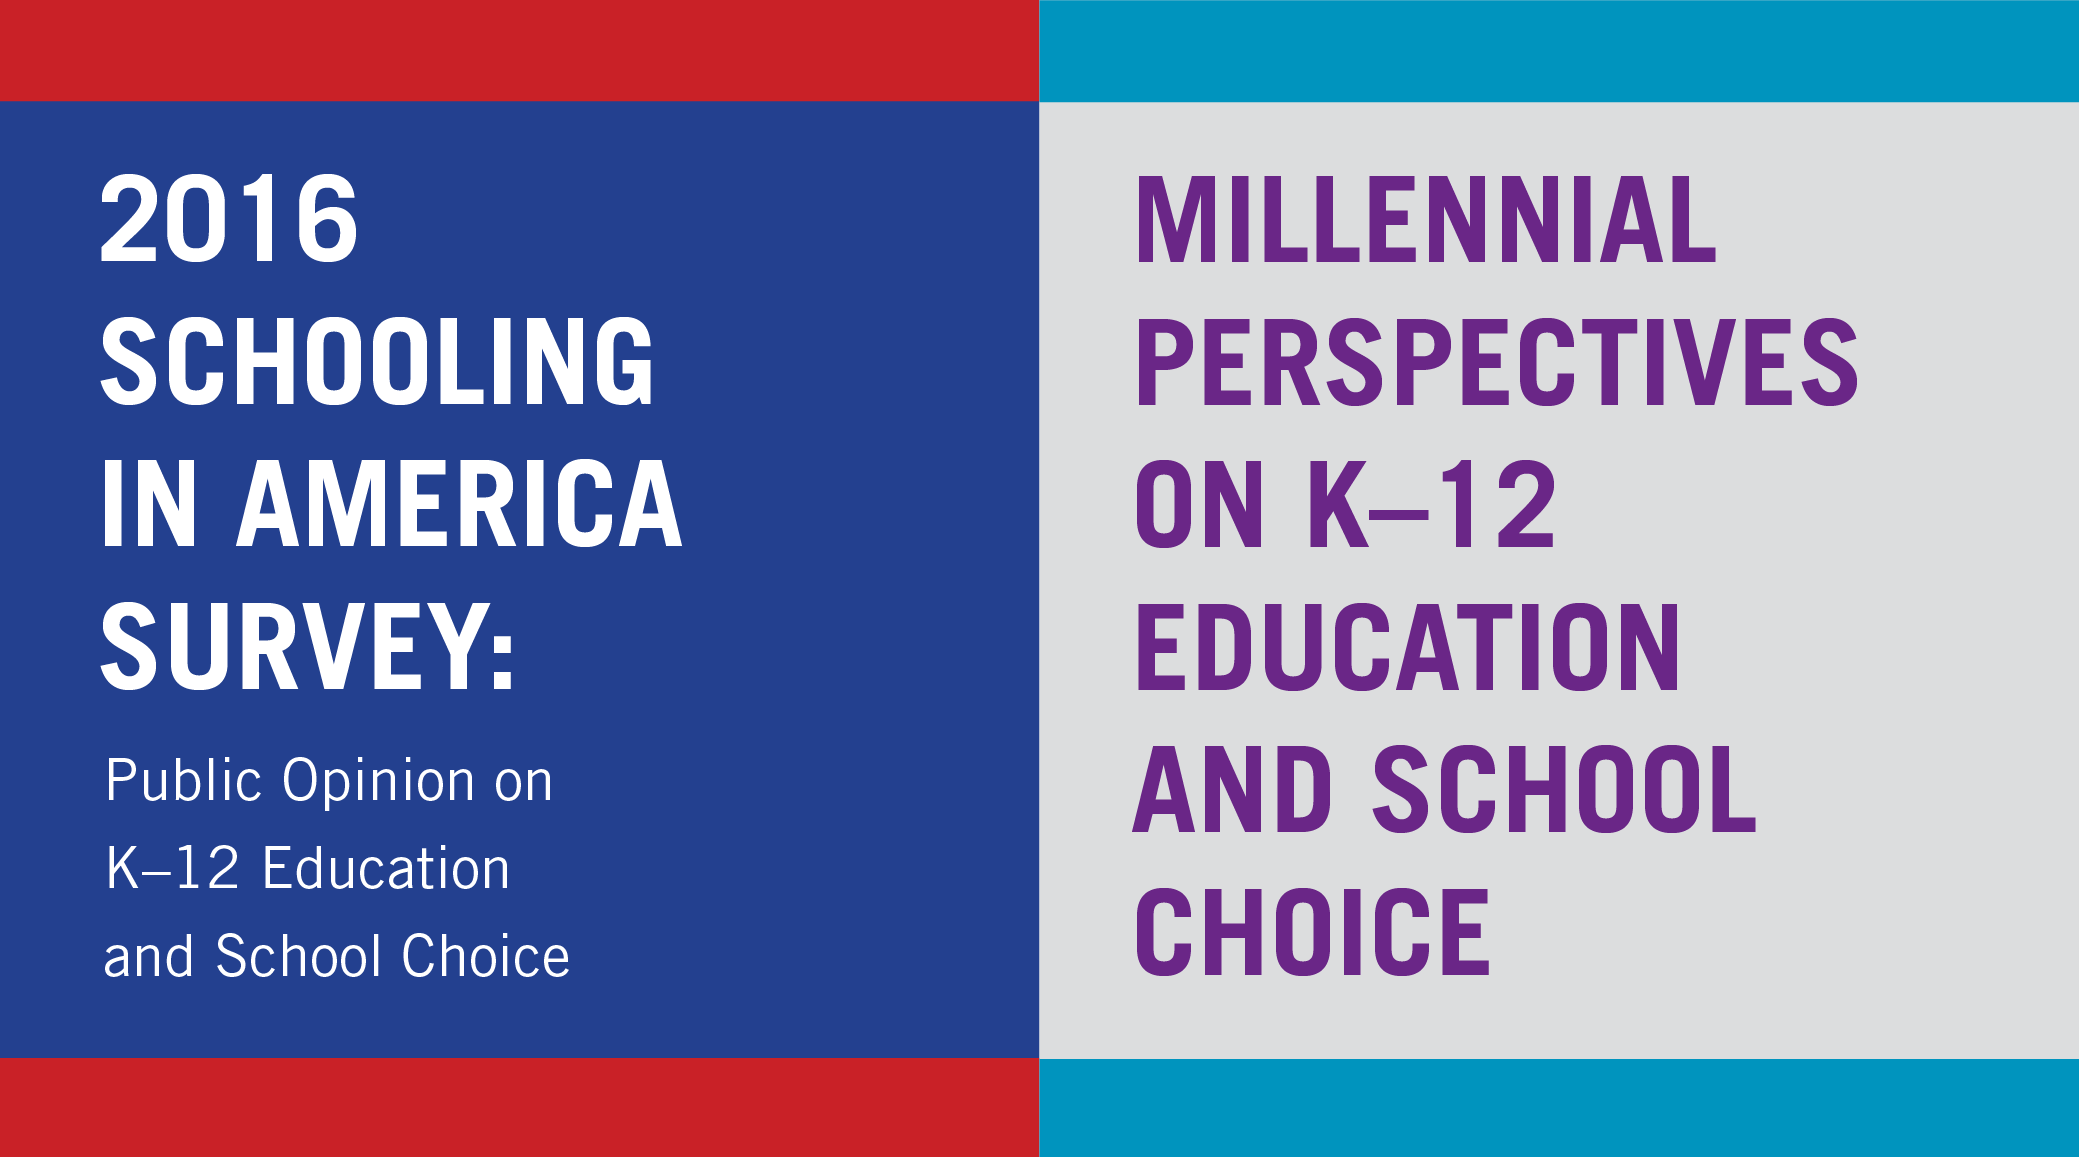 2016 Schooling in America Survey